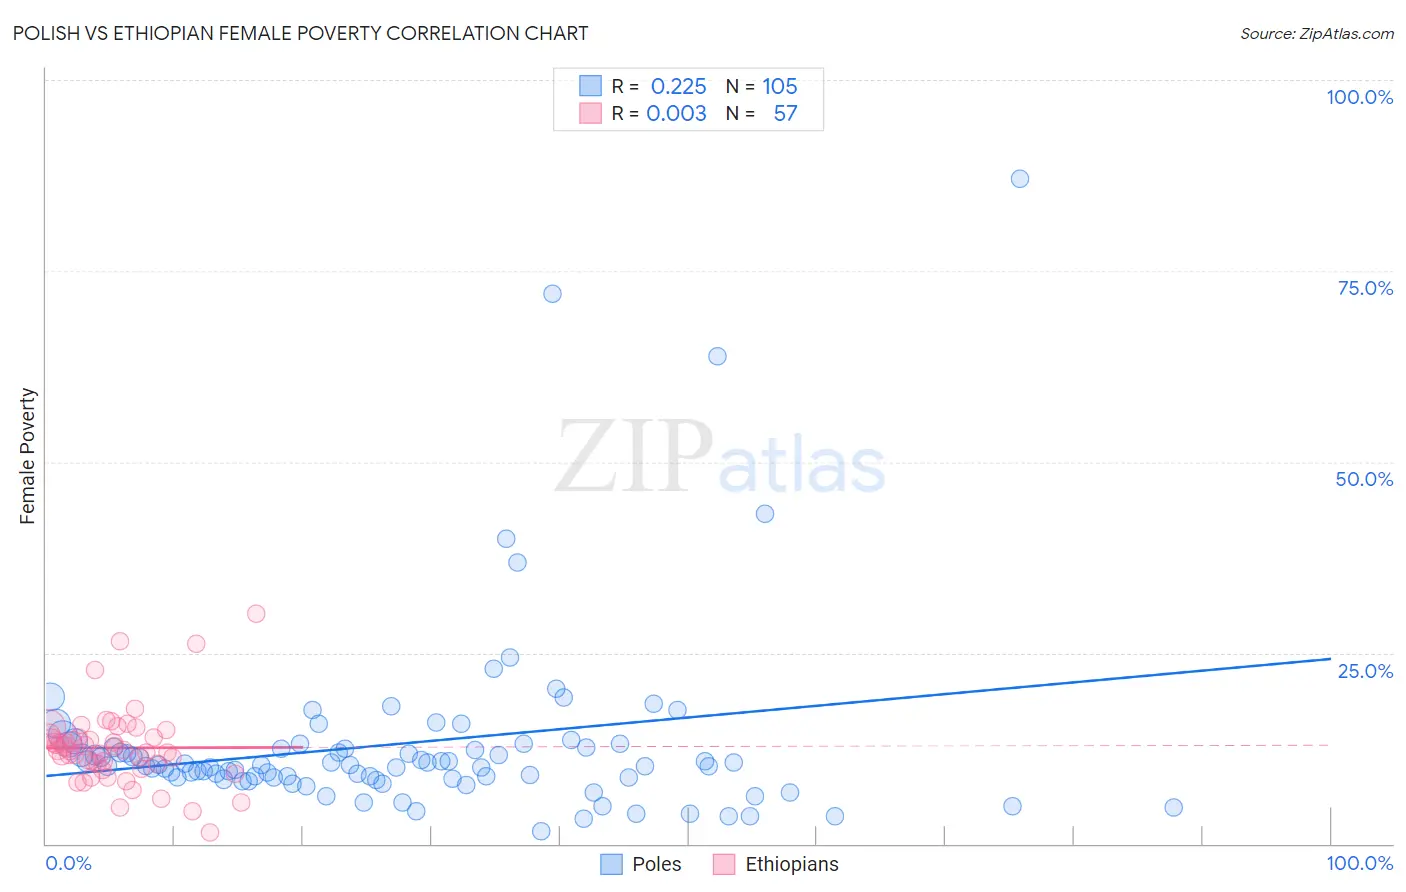 Polish vs Ethiopian Female Poverty